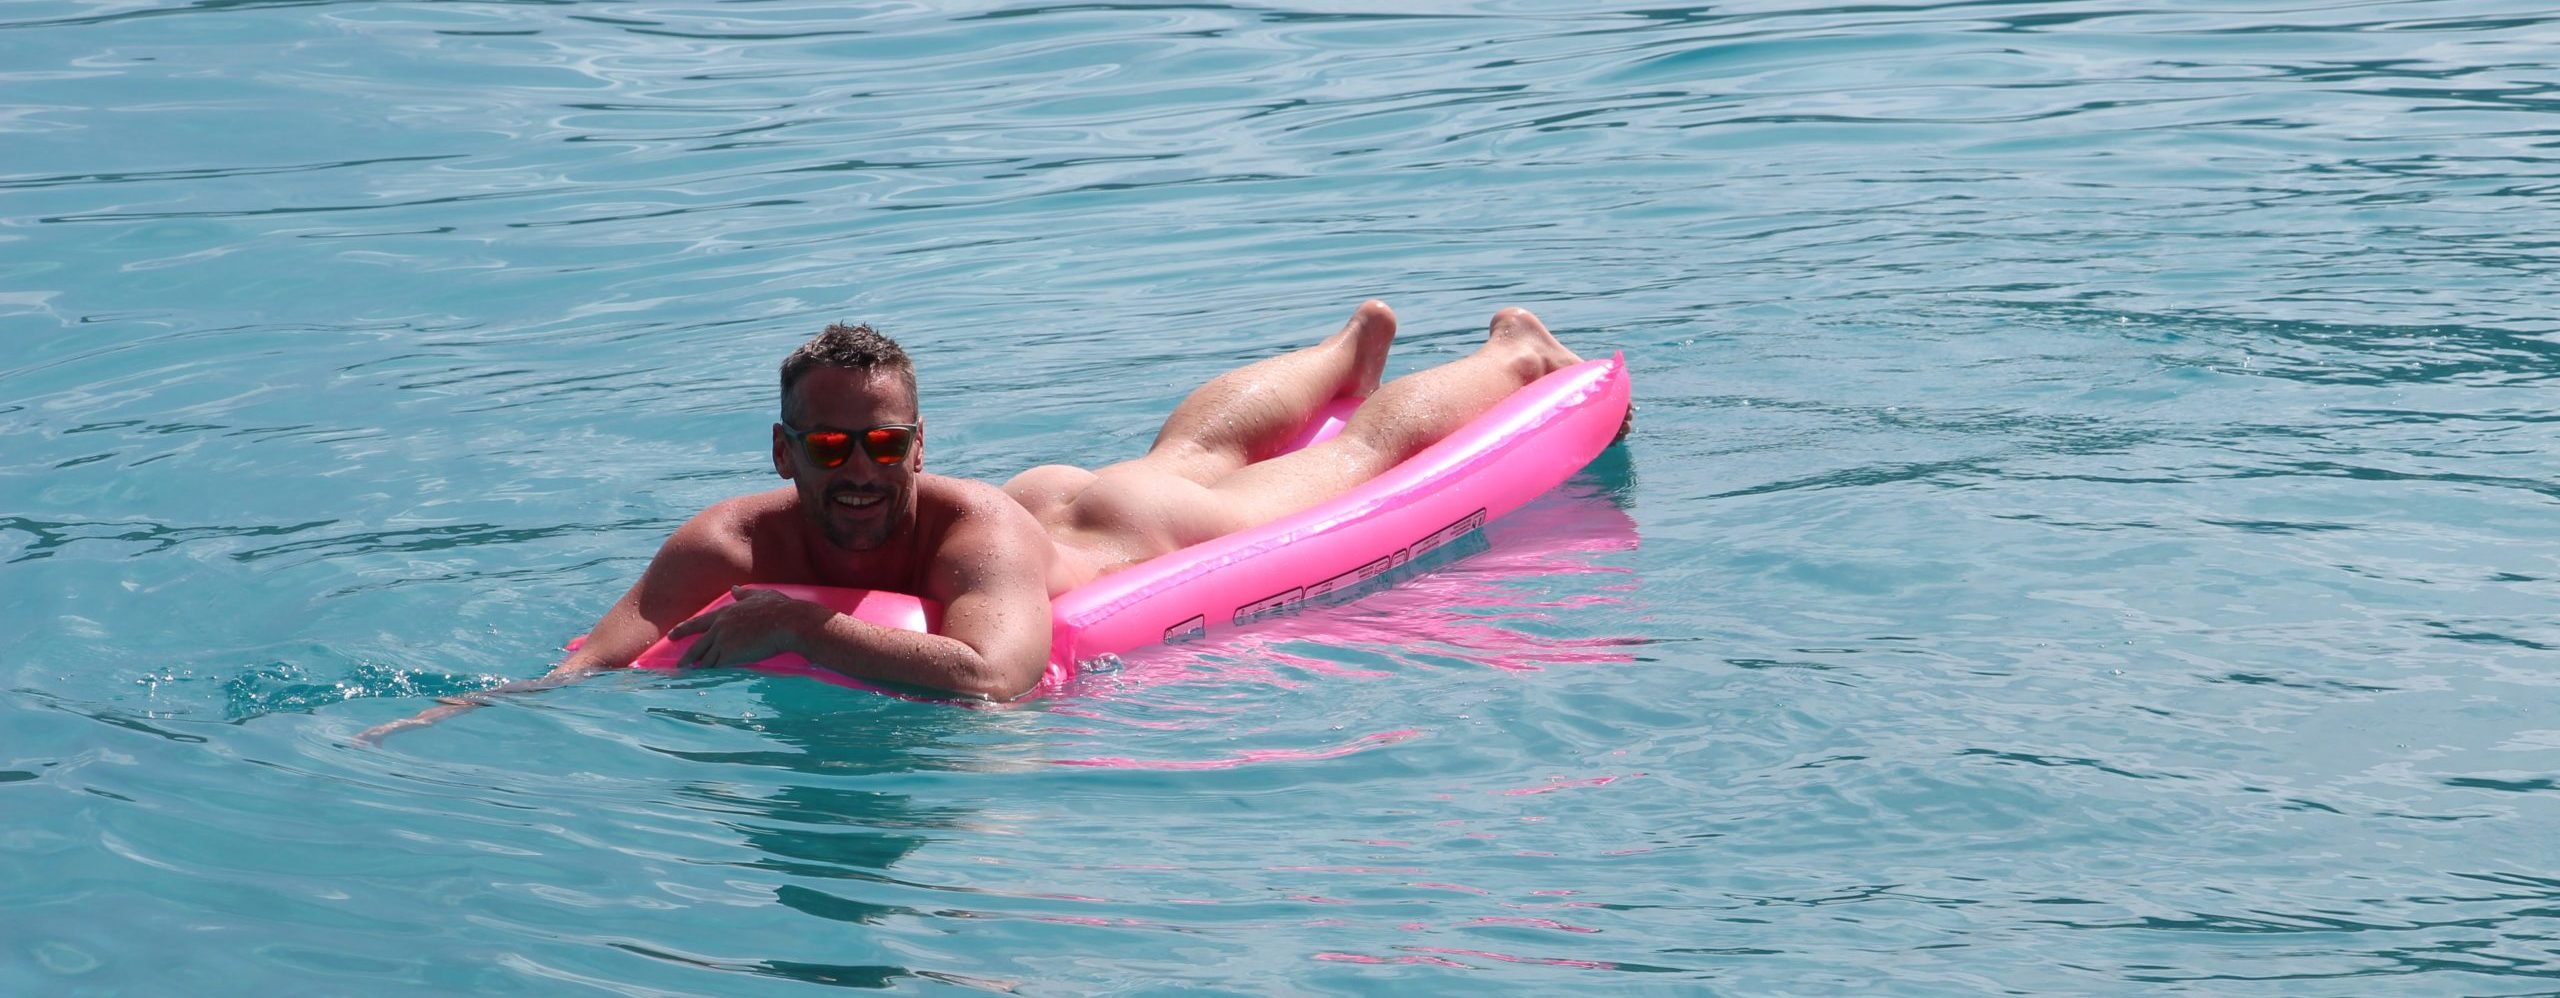 Saltyboys skipper Ross naked on airbed Tahiti